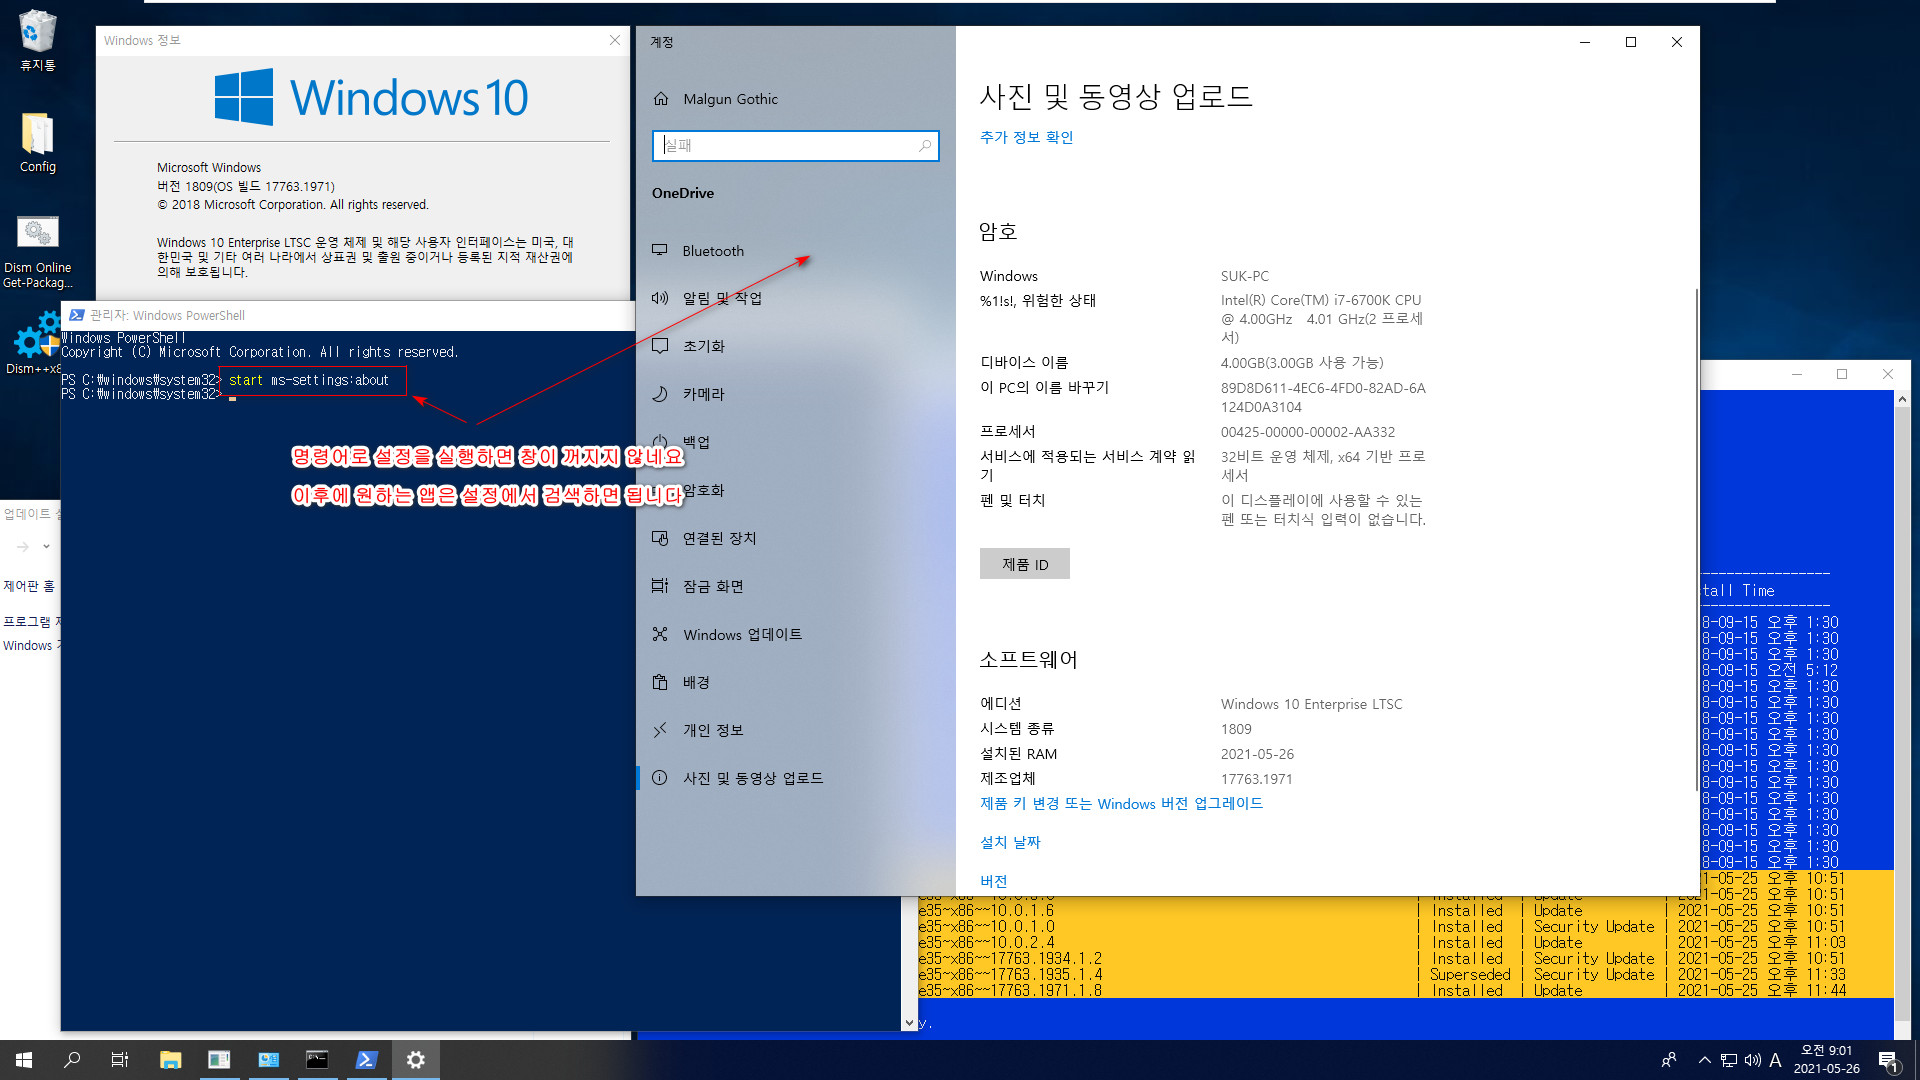 Windows 10 Enterprise LTSC 2019 - 버전 1809 (OS 빌드 17763.1971) - KB5003217 선택적 업데이트의 설정창 꺼짐 현상 테스트 - 명렁어 방식으로는 설정창이 열리는데 불편합니다 2021-05-26_090110.jpg